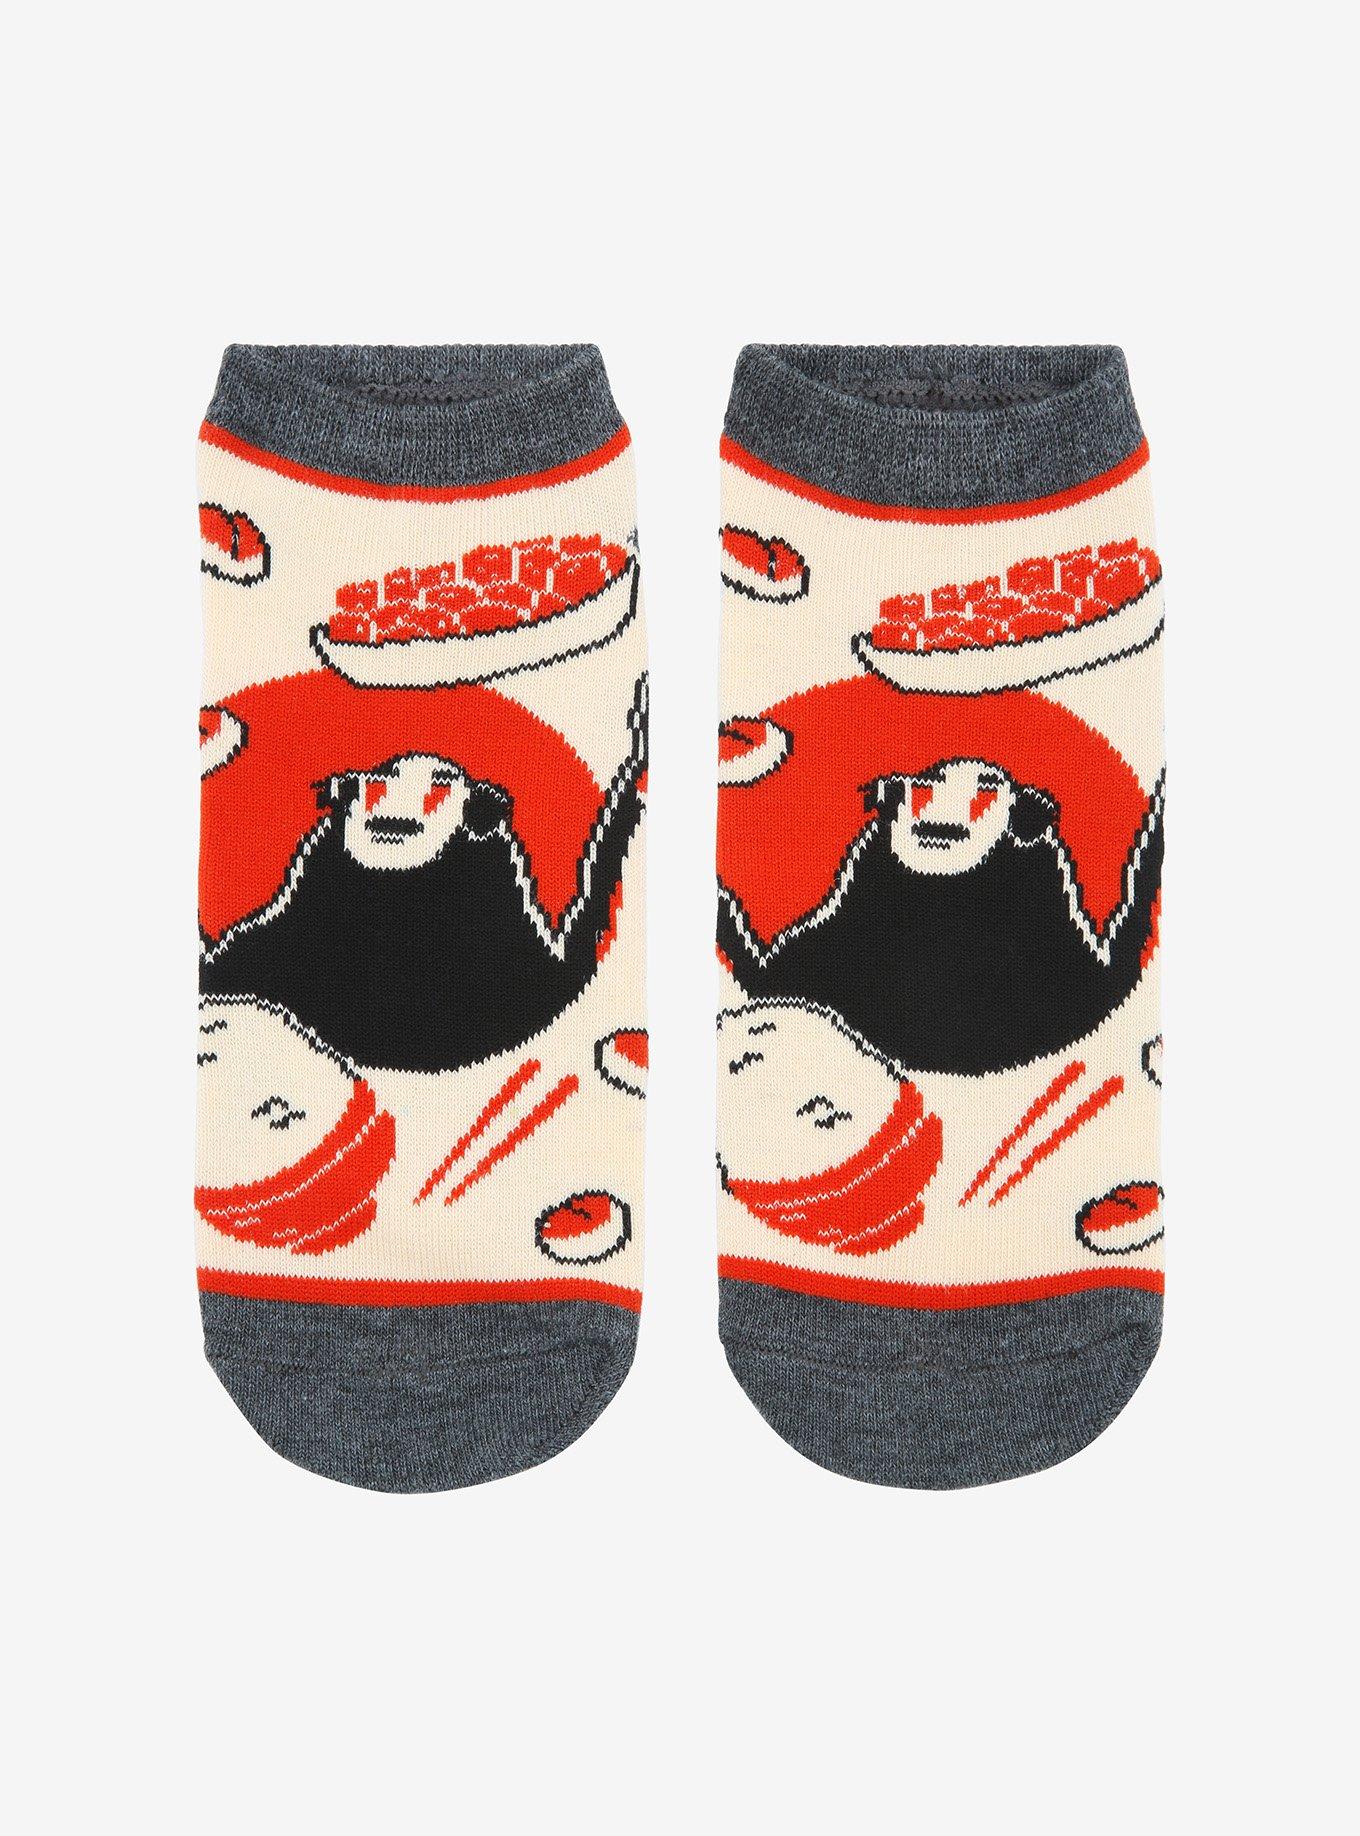 Studio Ghibli Spirited Away No-Face No-Show Socks, , hi-res